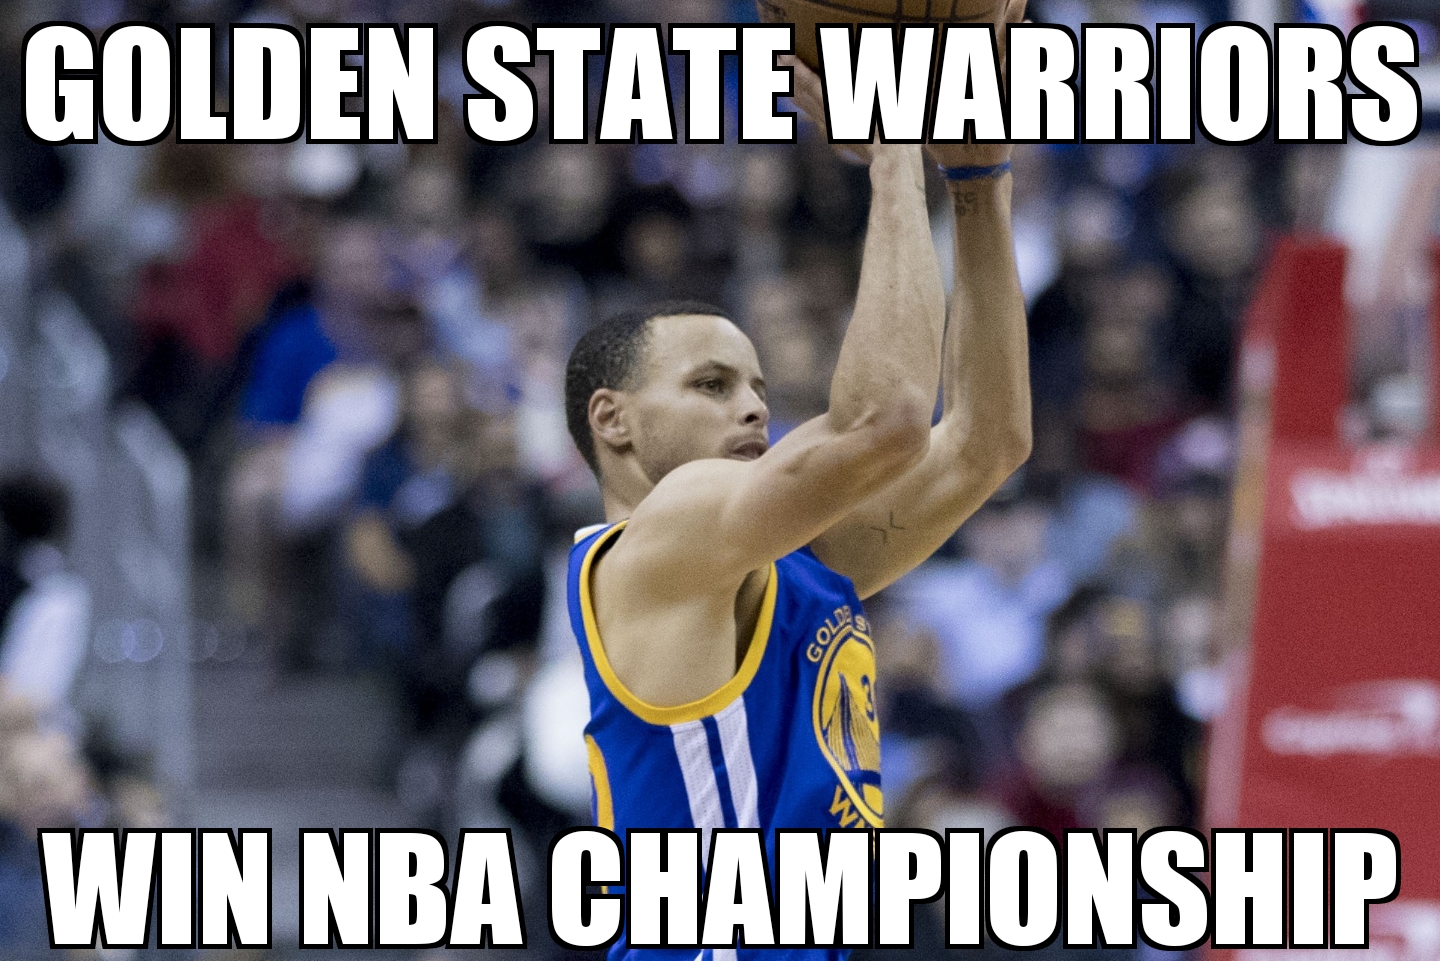 Warriors win NBA championship